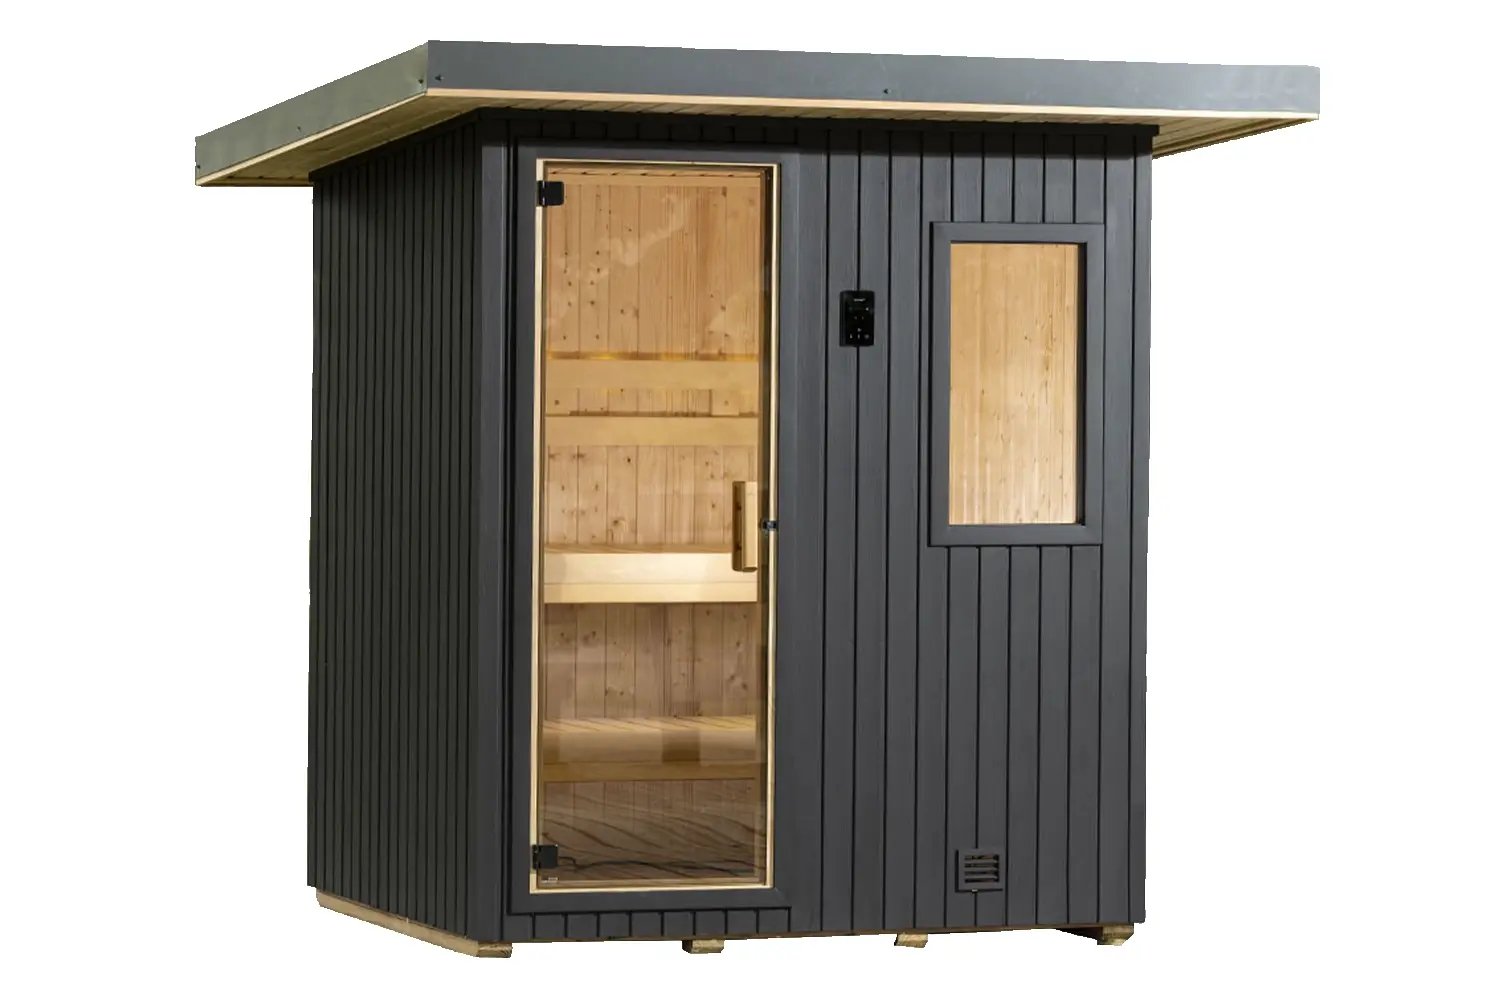 NorthStar 5'x6' Outdoor Sauna